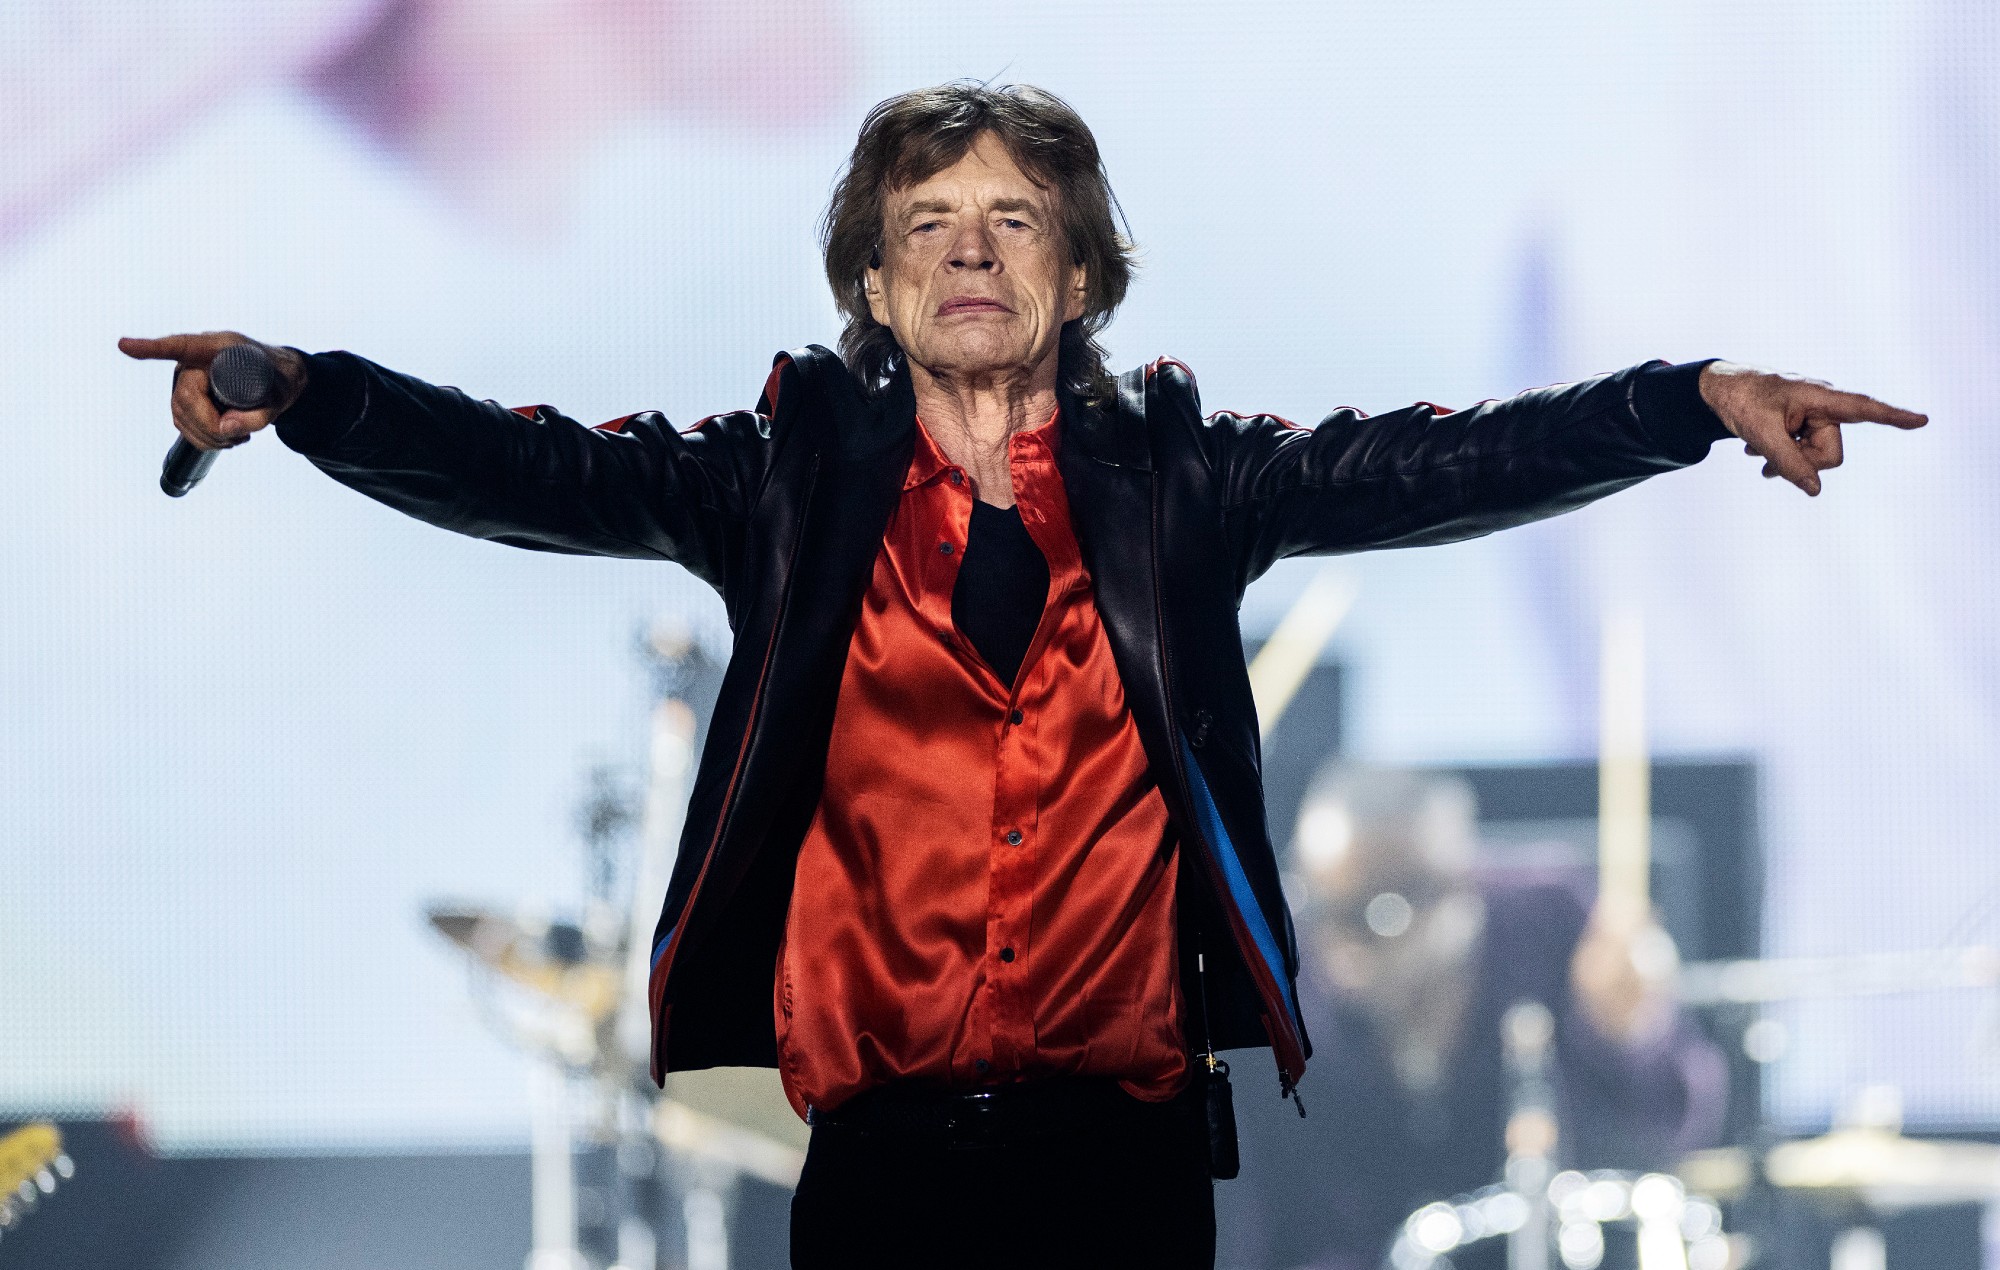 Watch Mick Jagger dance to ‘Moves Like Jagger’ at a bar